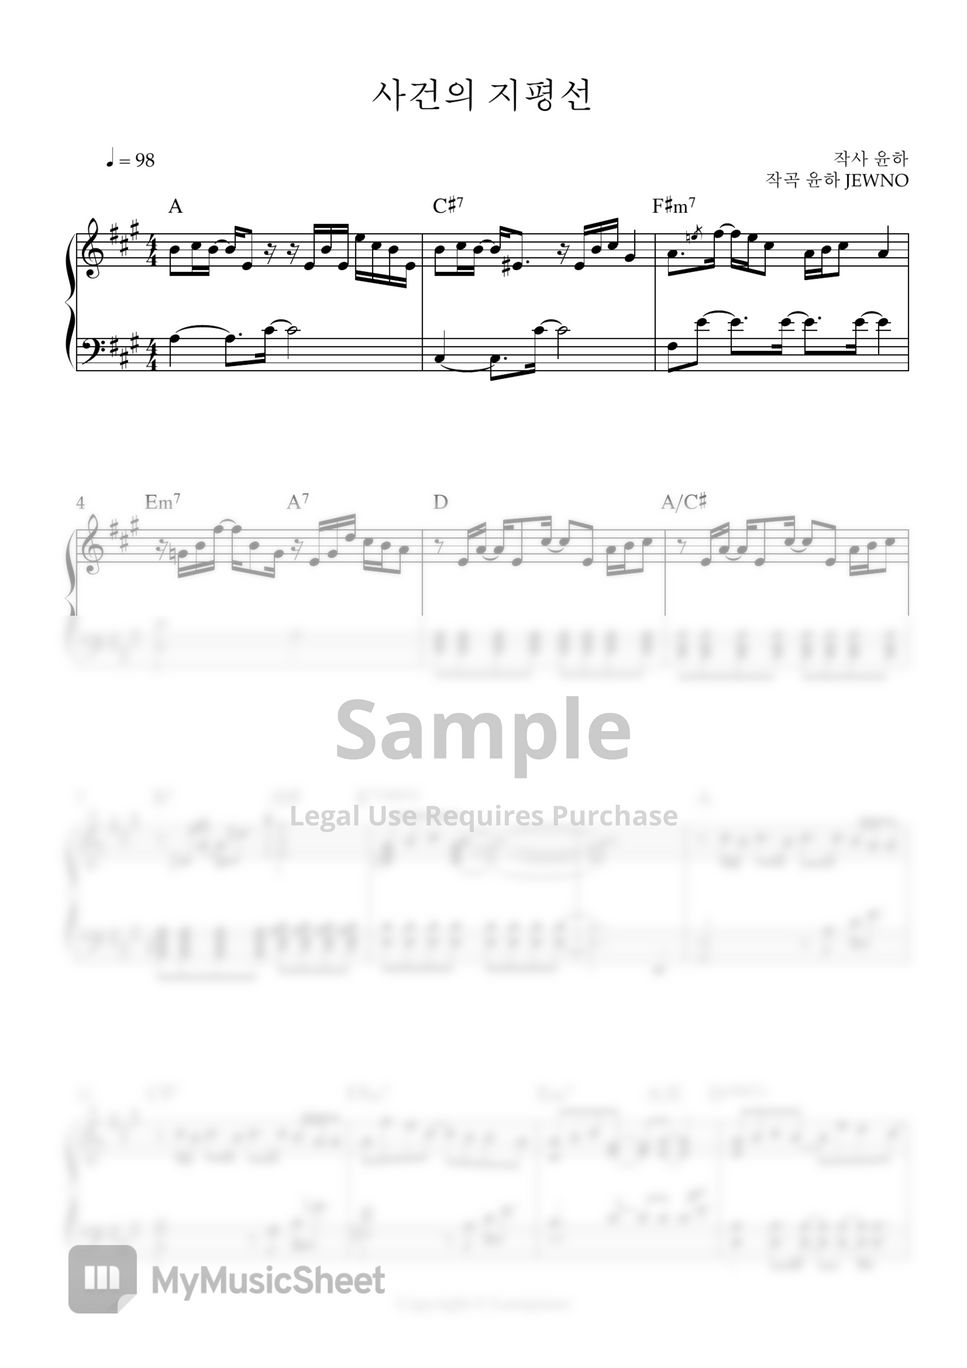 YOUNHA - Event Horizon (K-pop / piano cover / Chords) by Lamipiano